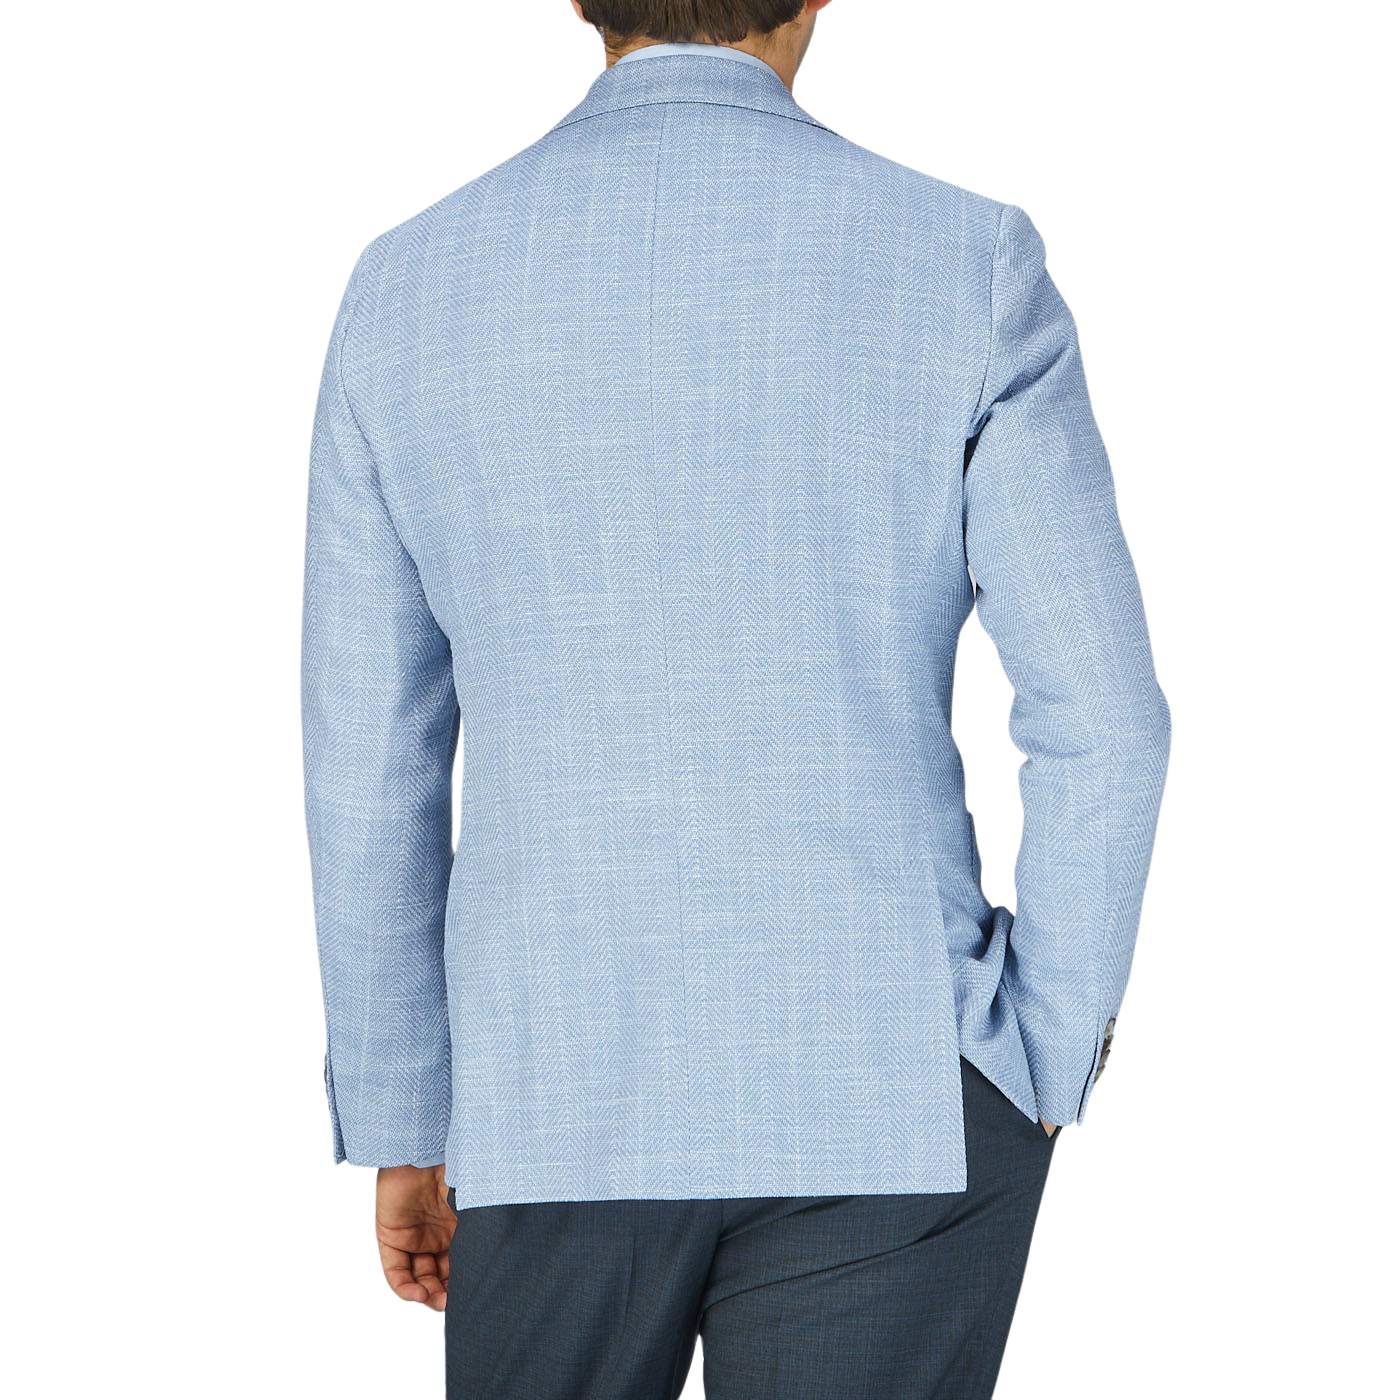 The back view of a man wearing an Eduard Dressler Light Blue Herringbone Cotton Linen Sendrik Blazer.